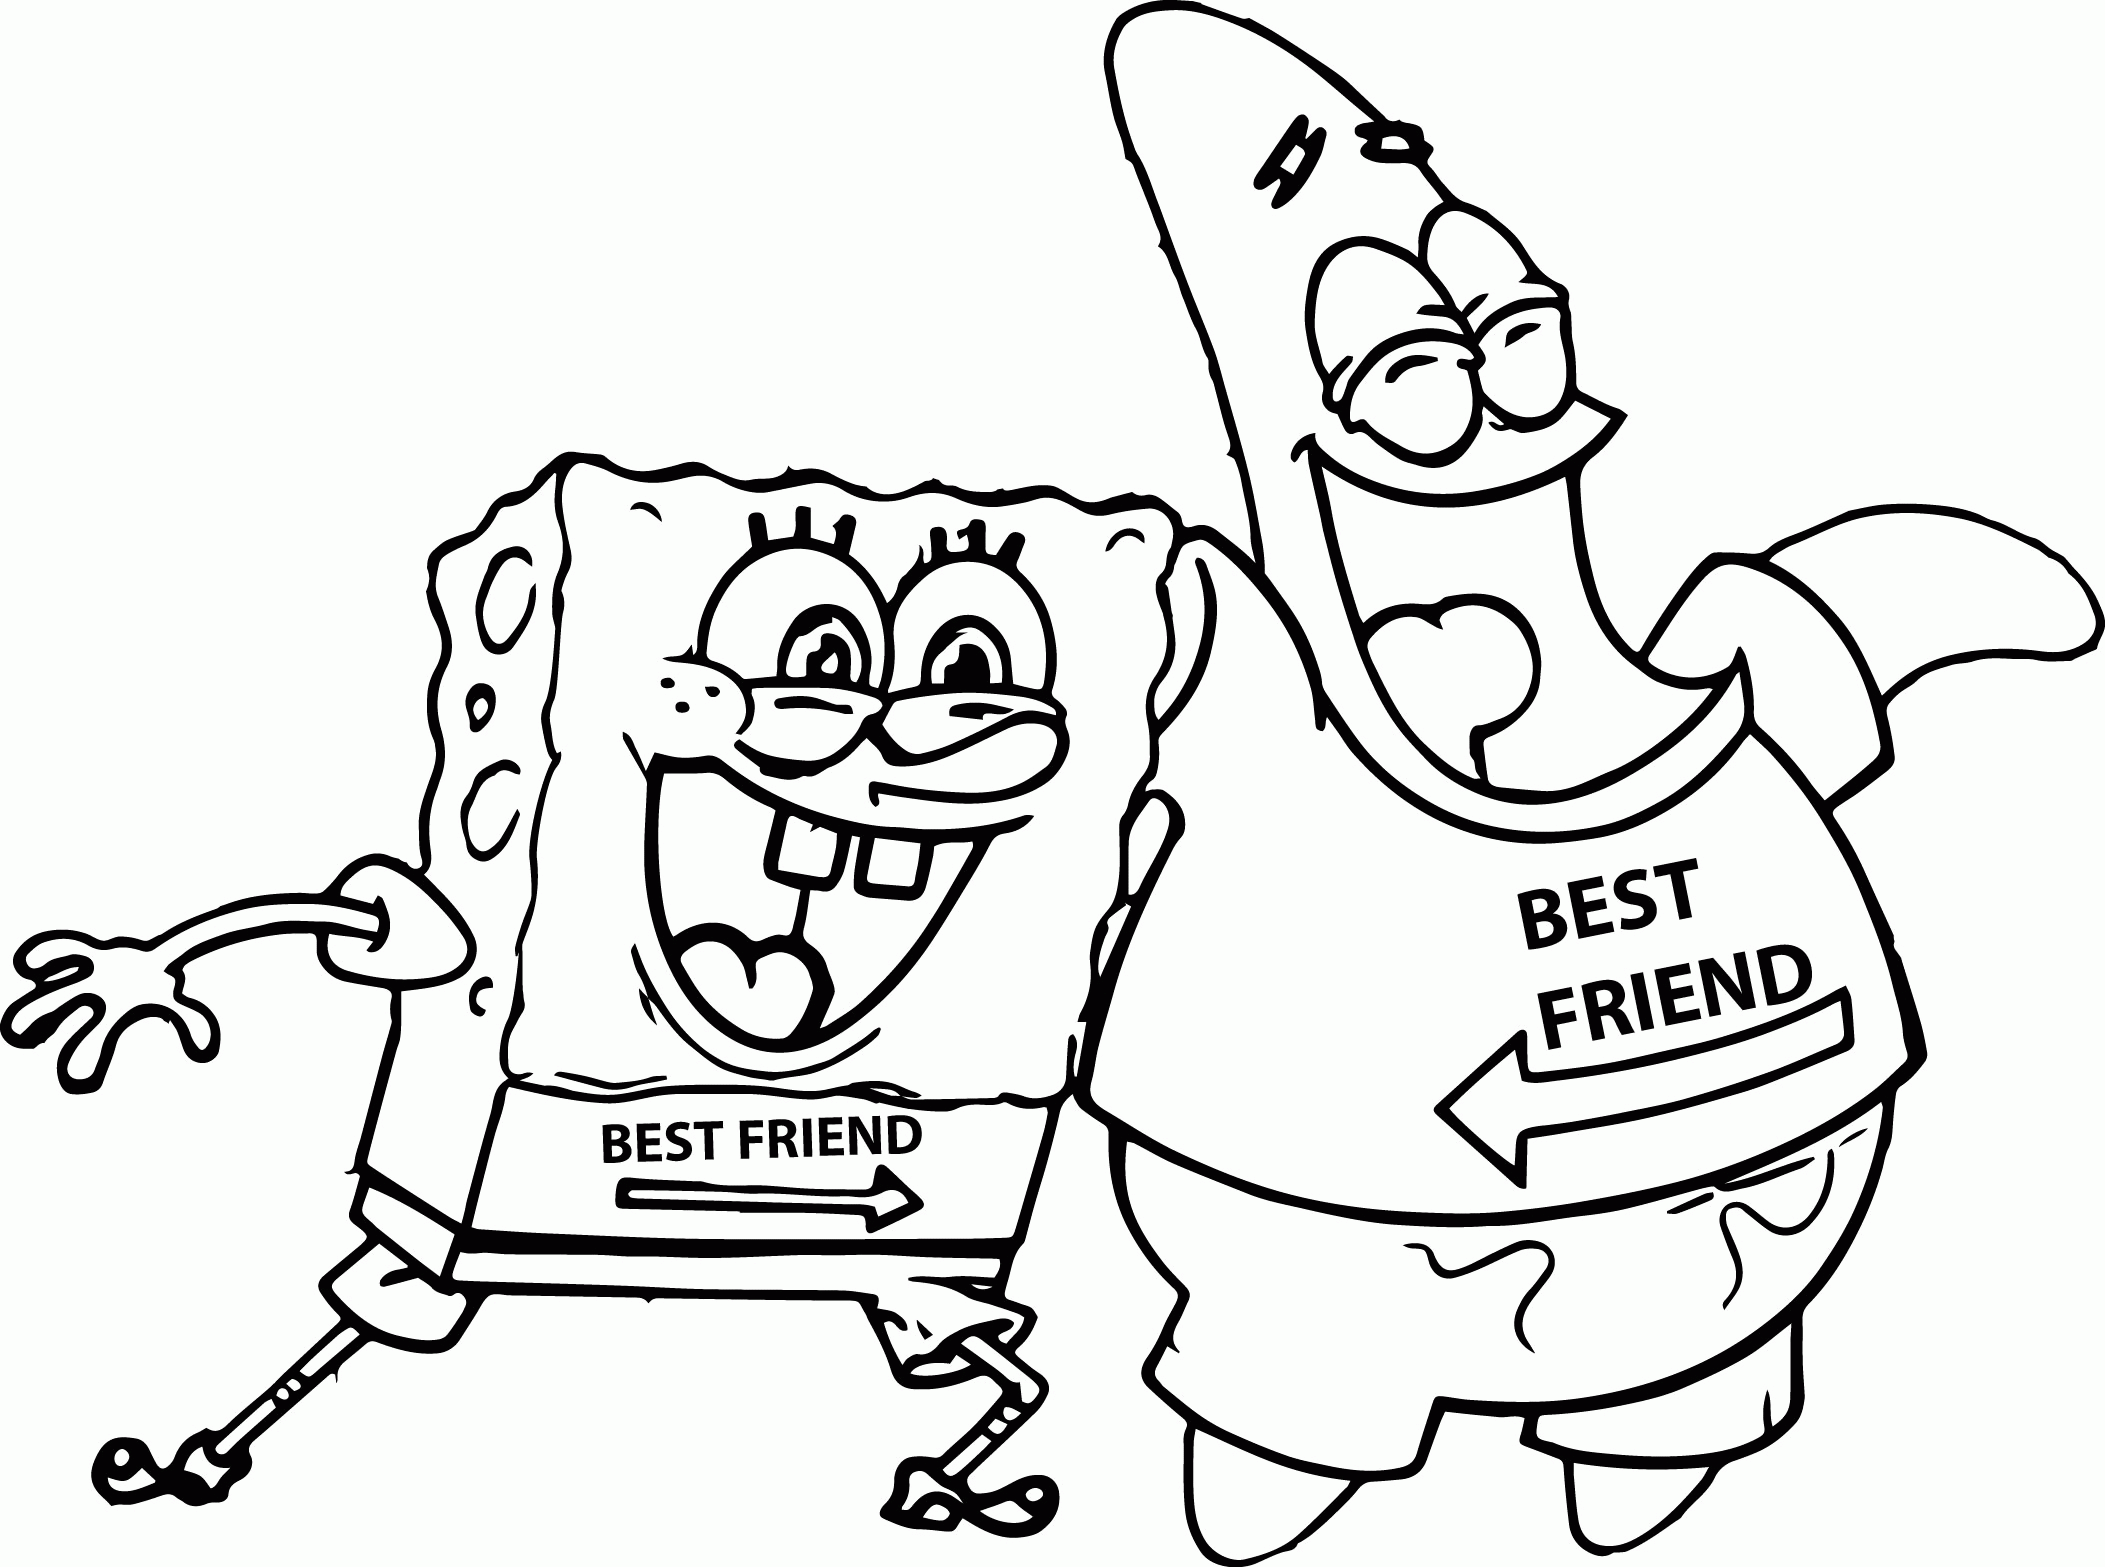 Spongebob Patrick Best Friends Coloring Page | Wecoloringpage